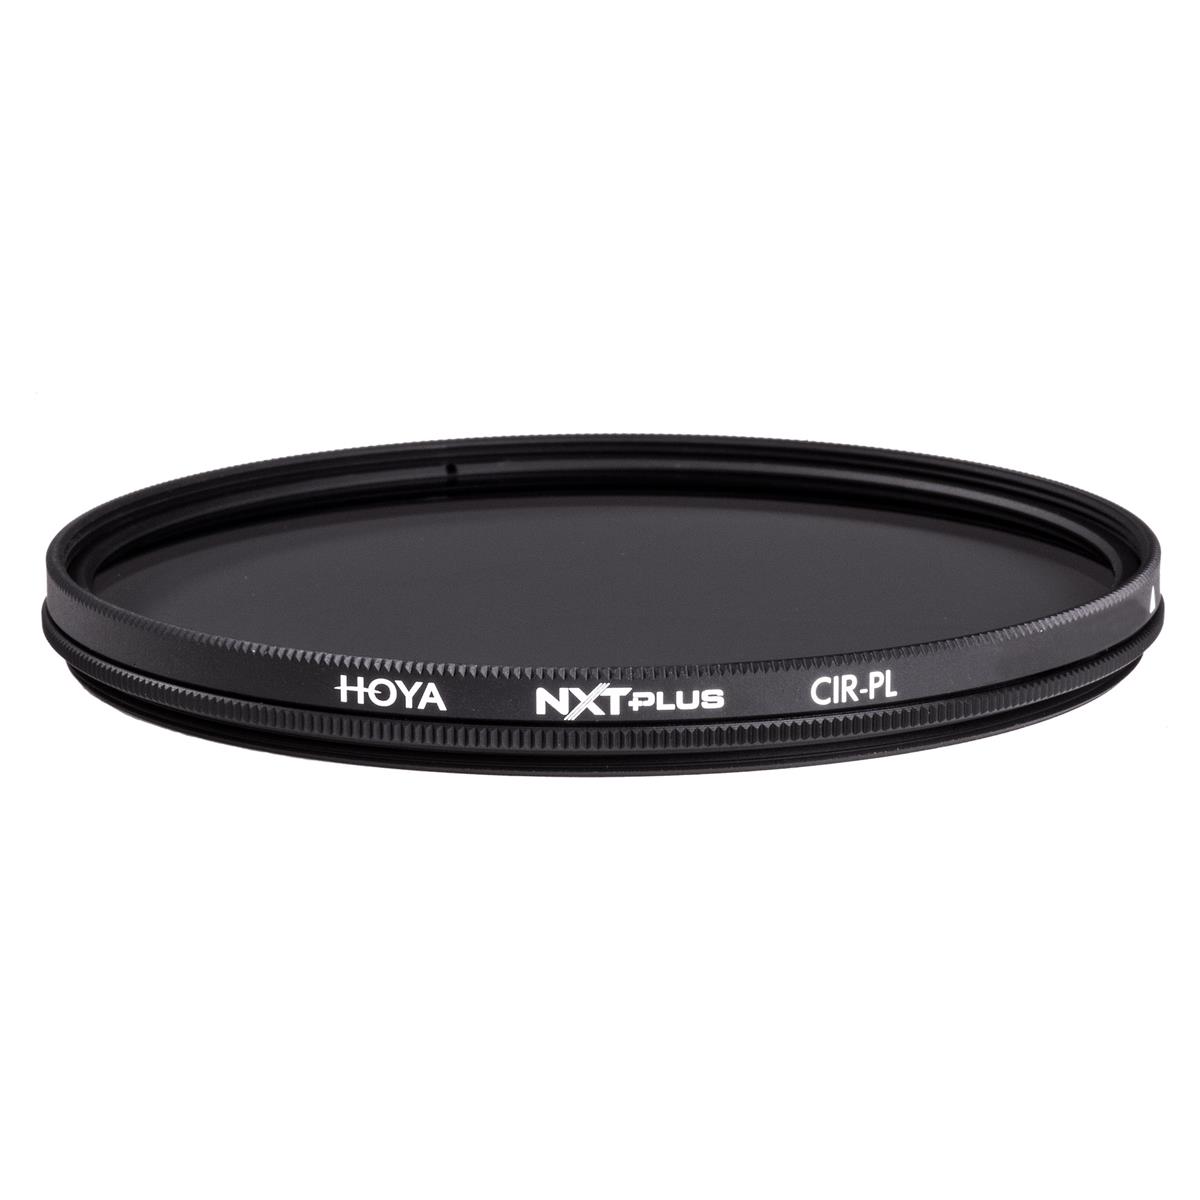 Hoya 72mm NXT plus Circular Polarizer  Filter